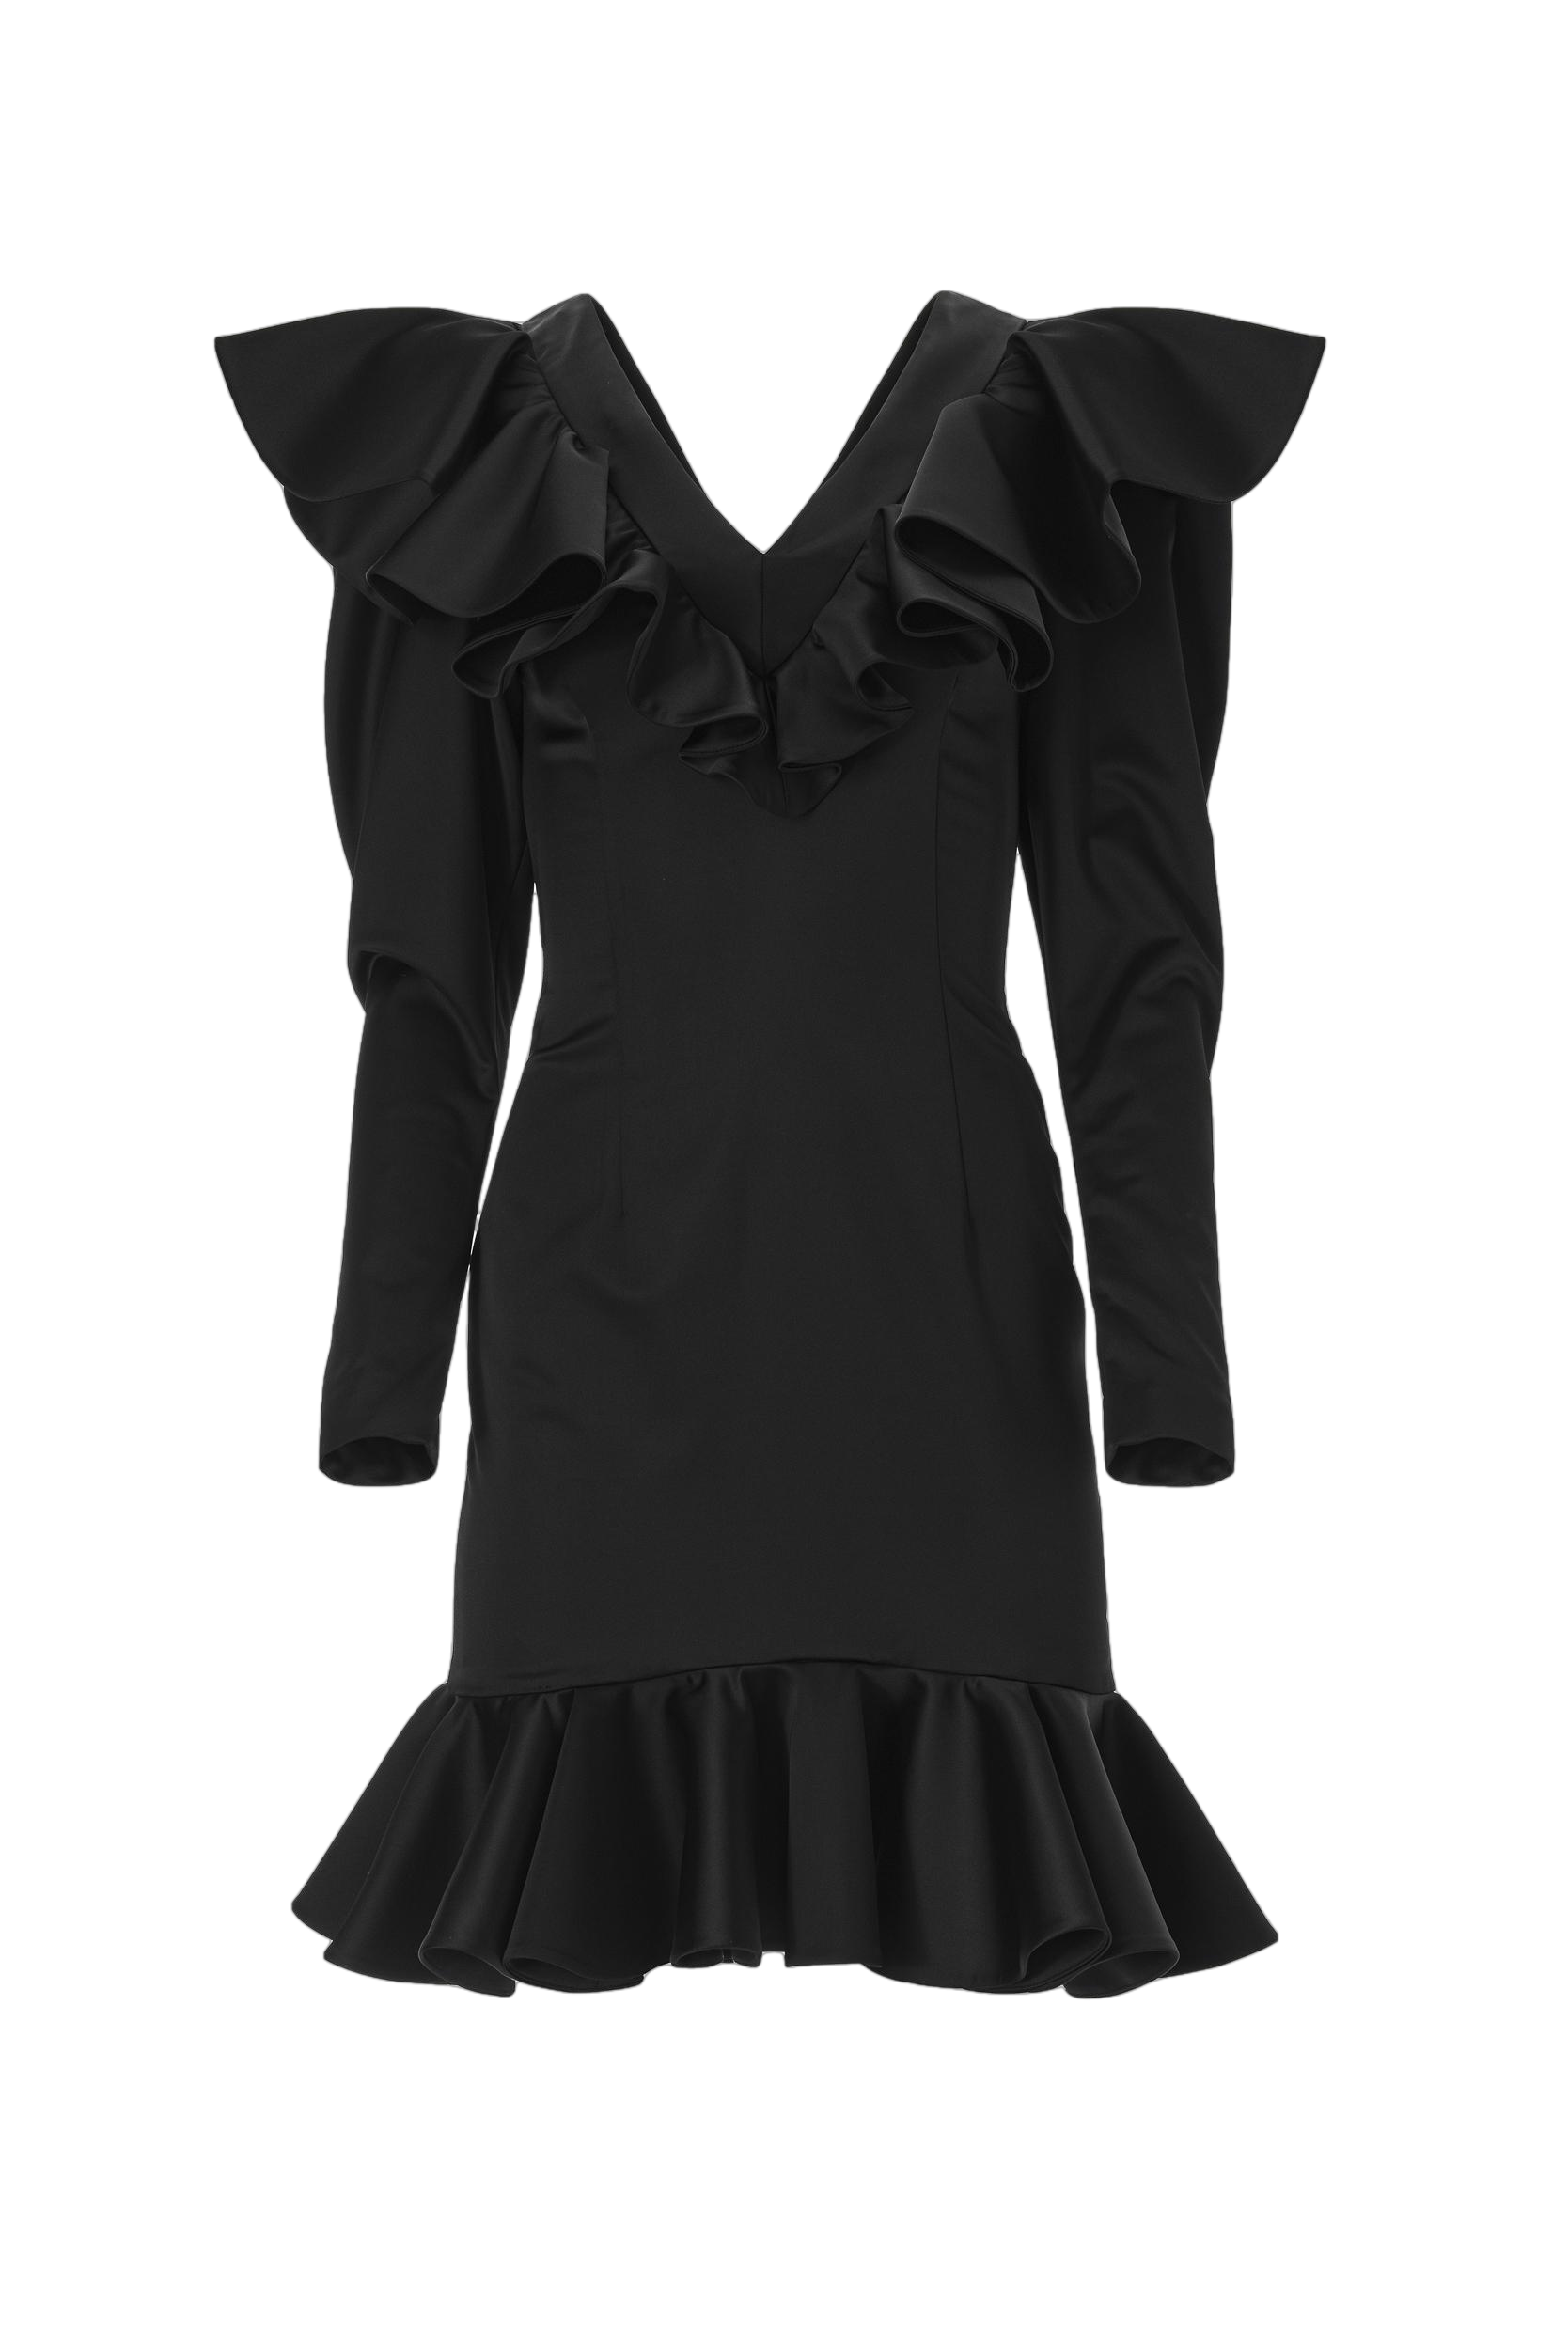 Lita Couture Signature Black Dress